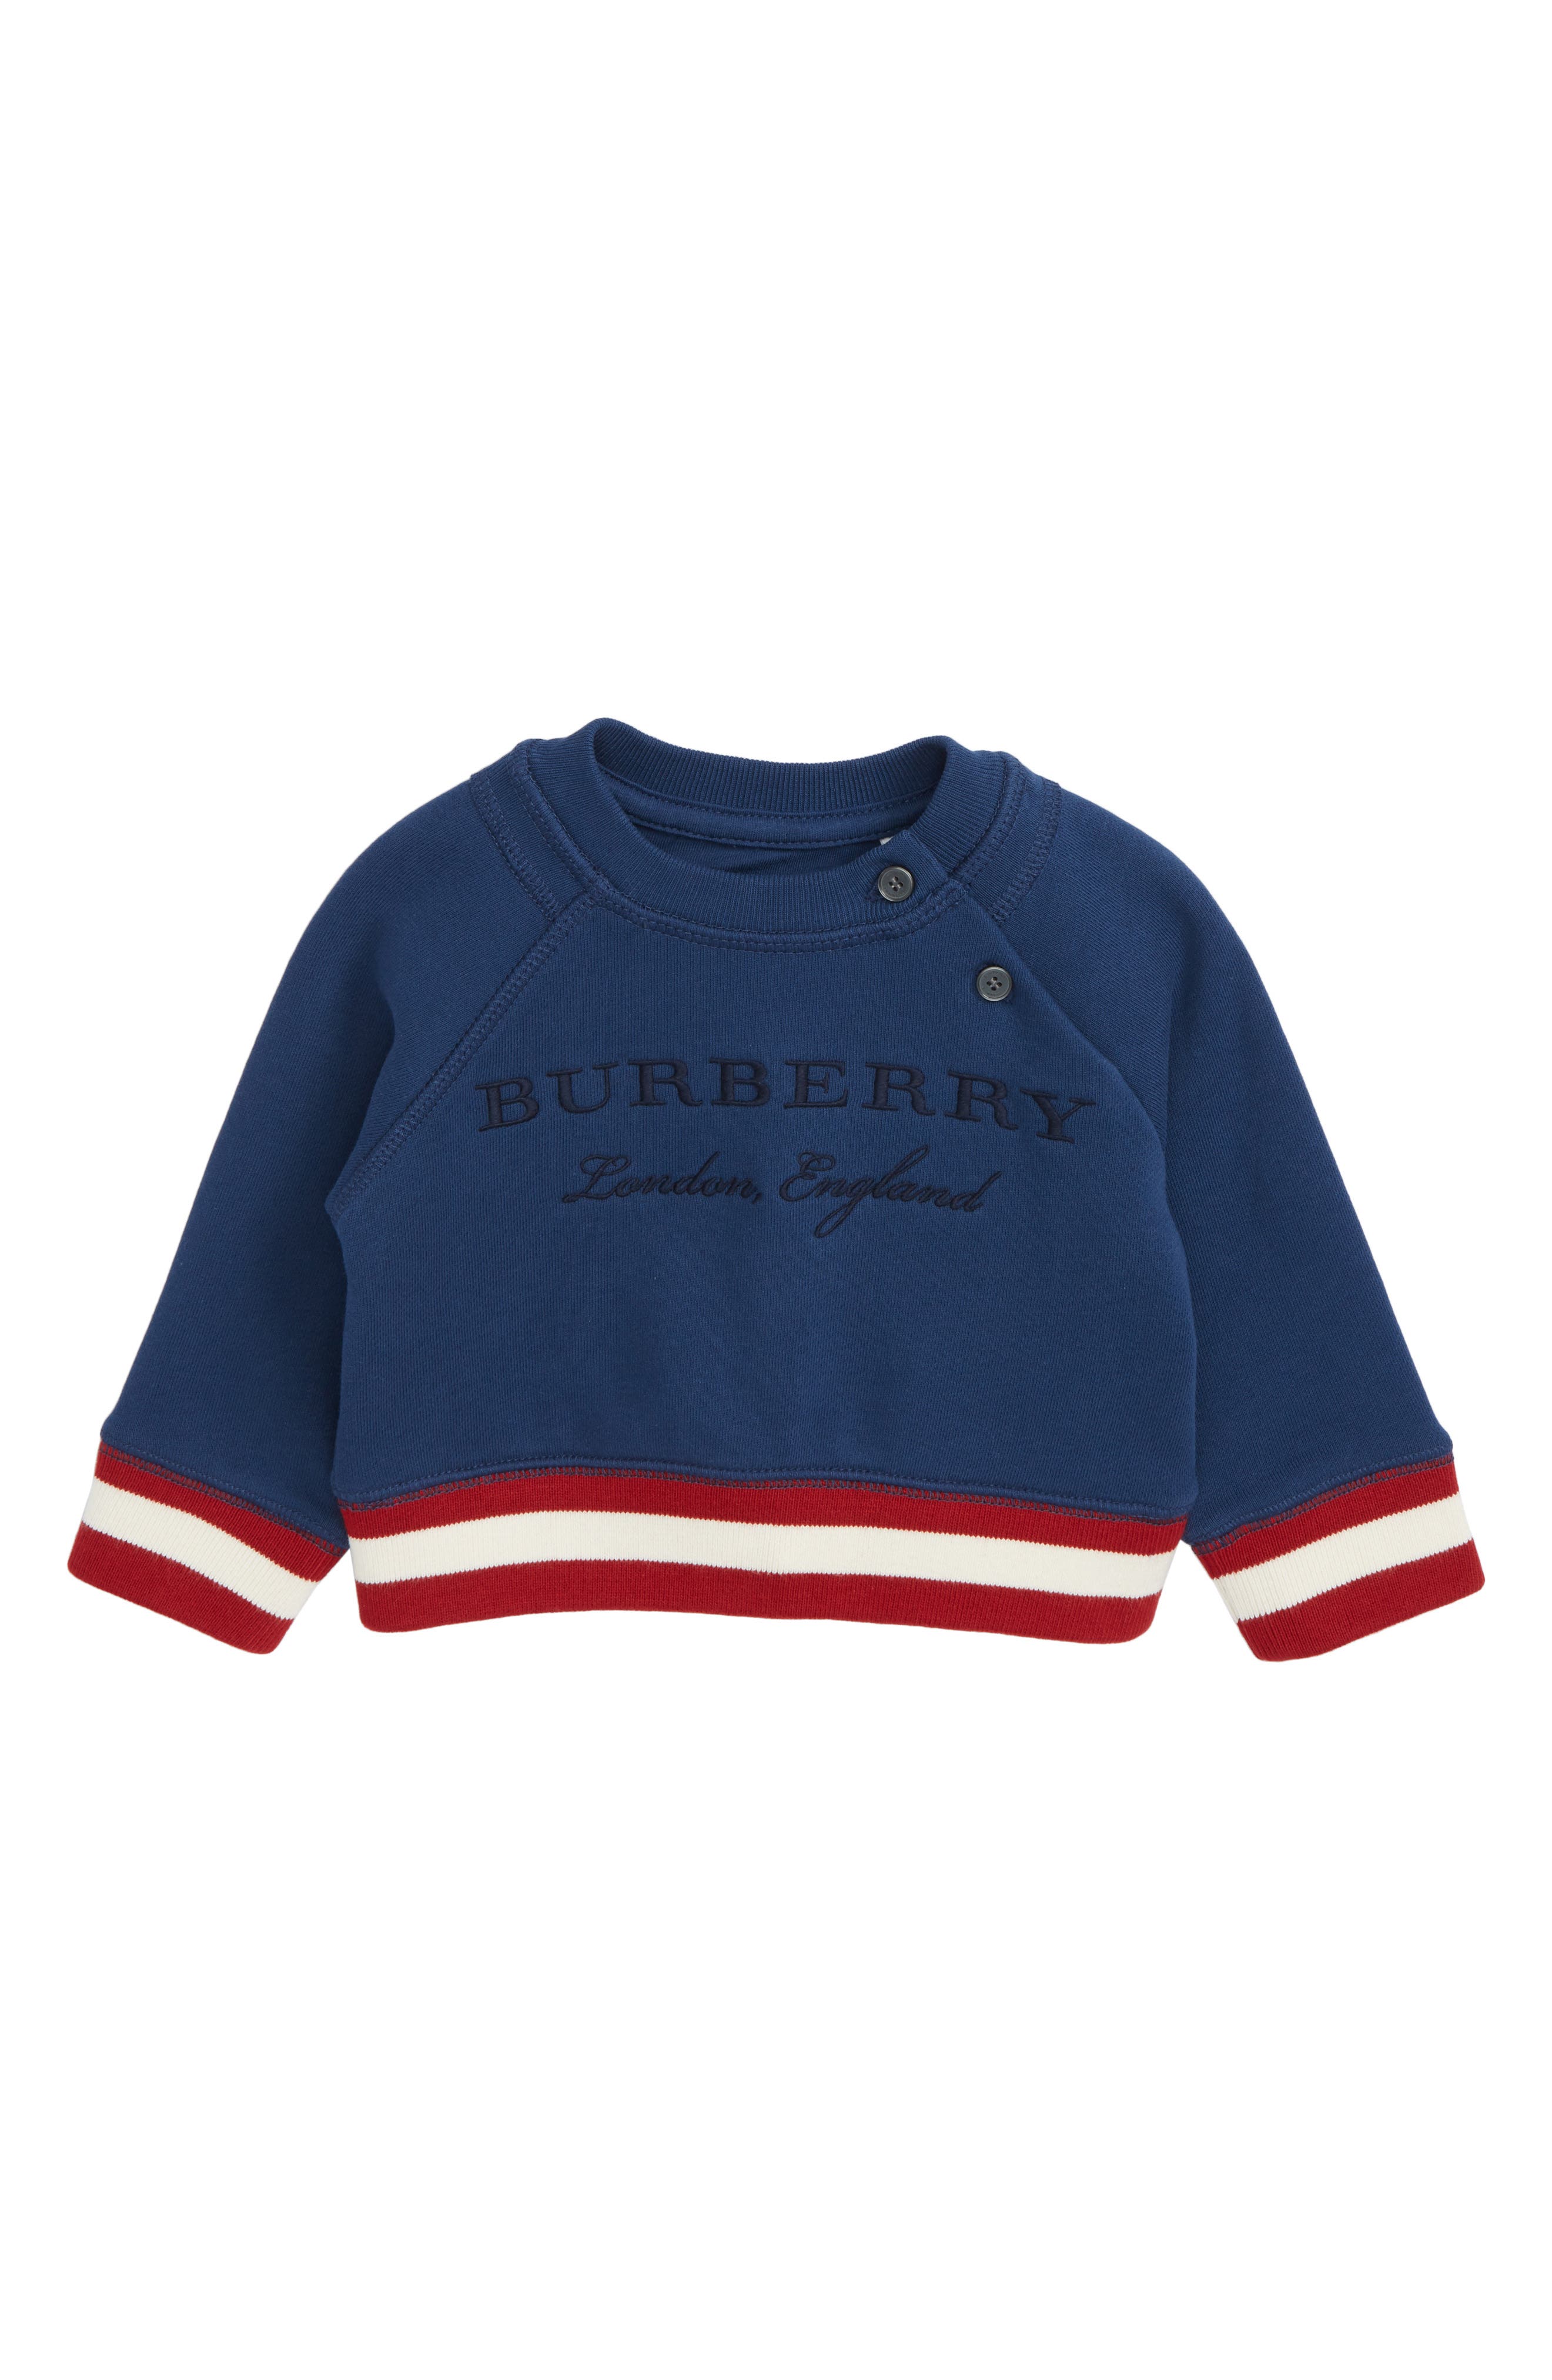 burberry sweater kids gold